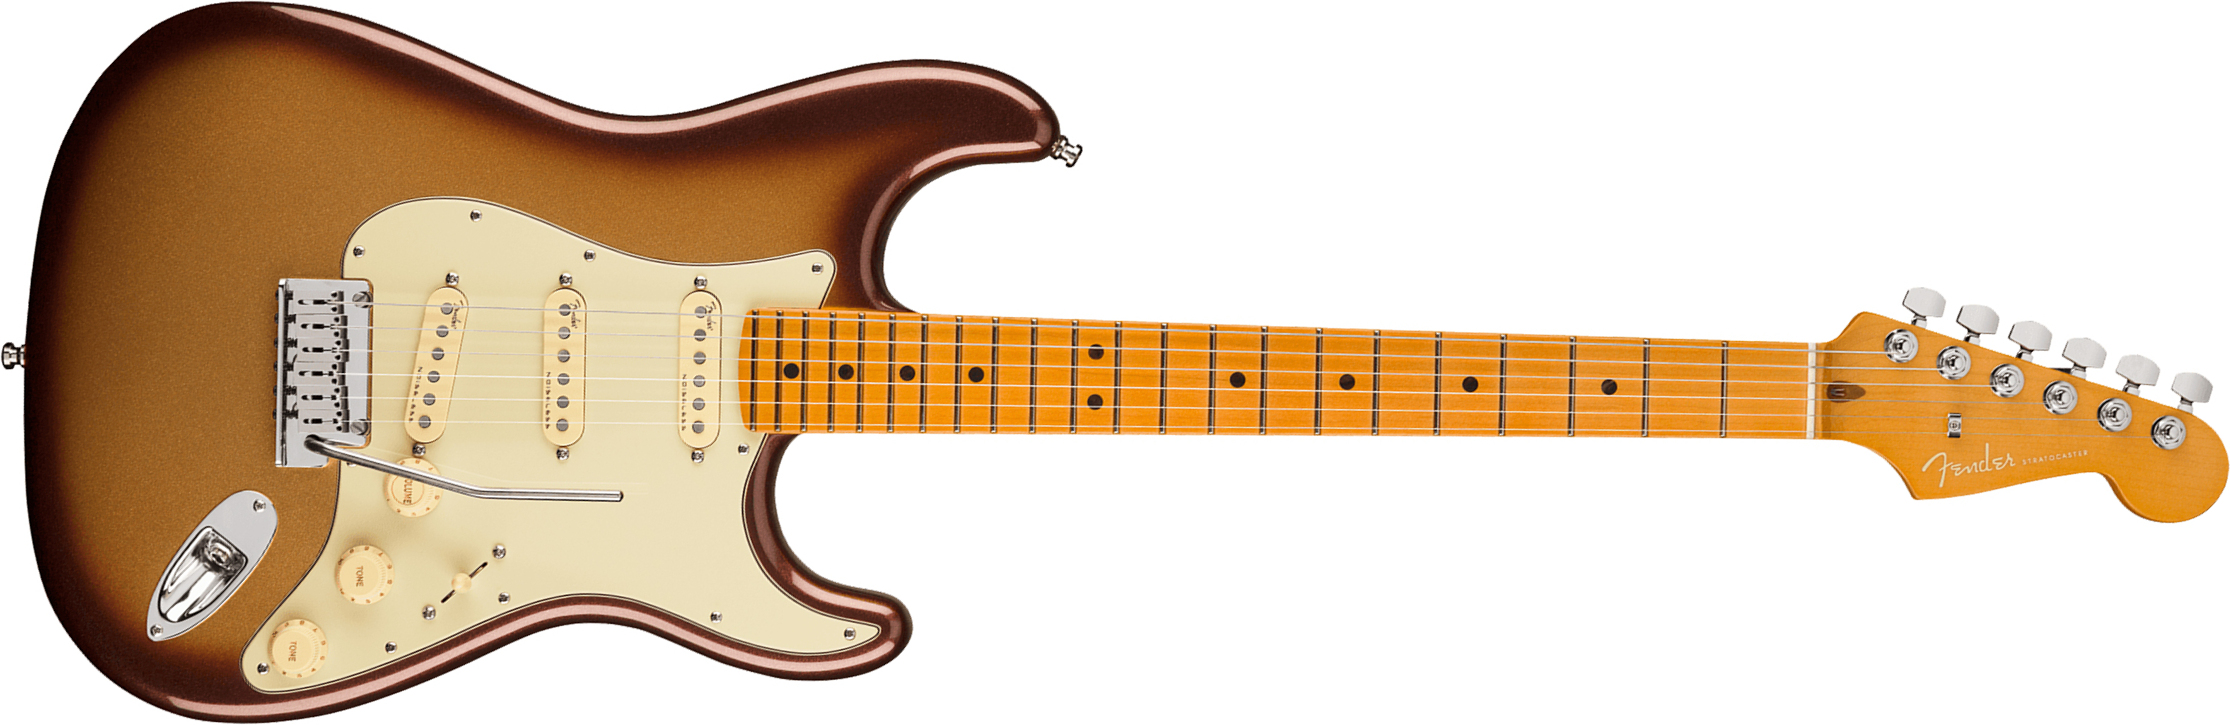 Fender Strat American Ultra 2019 Usa Mn - Mocha Burst - E-Gitarre in Str-Form - Main picture